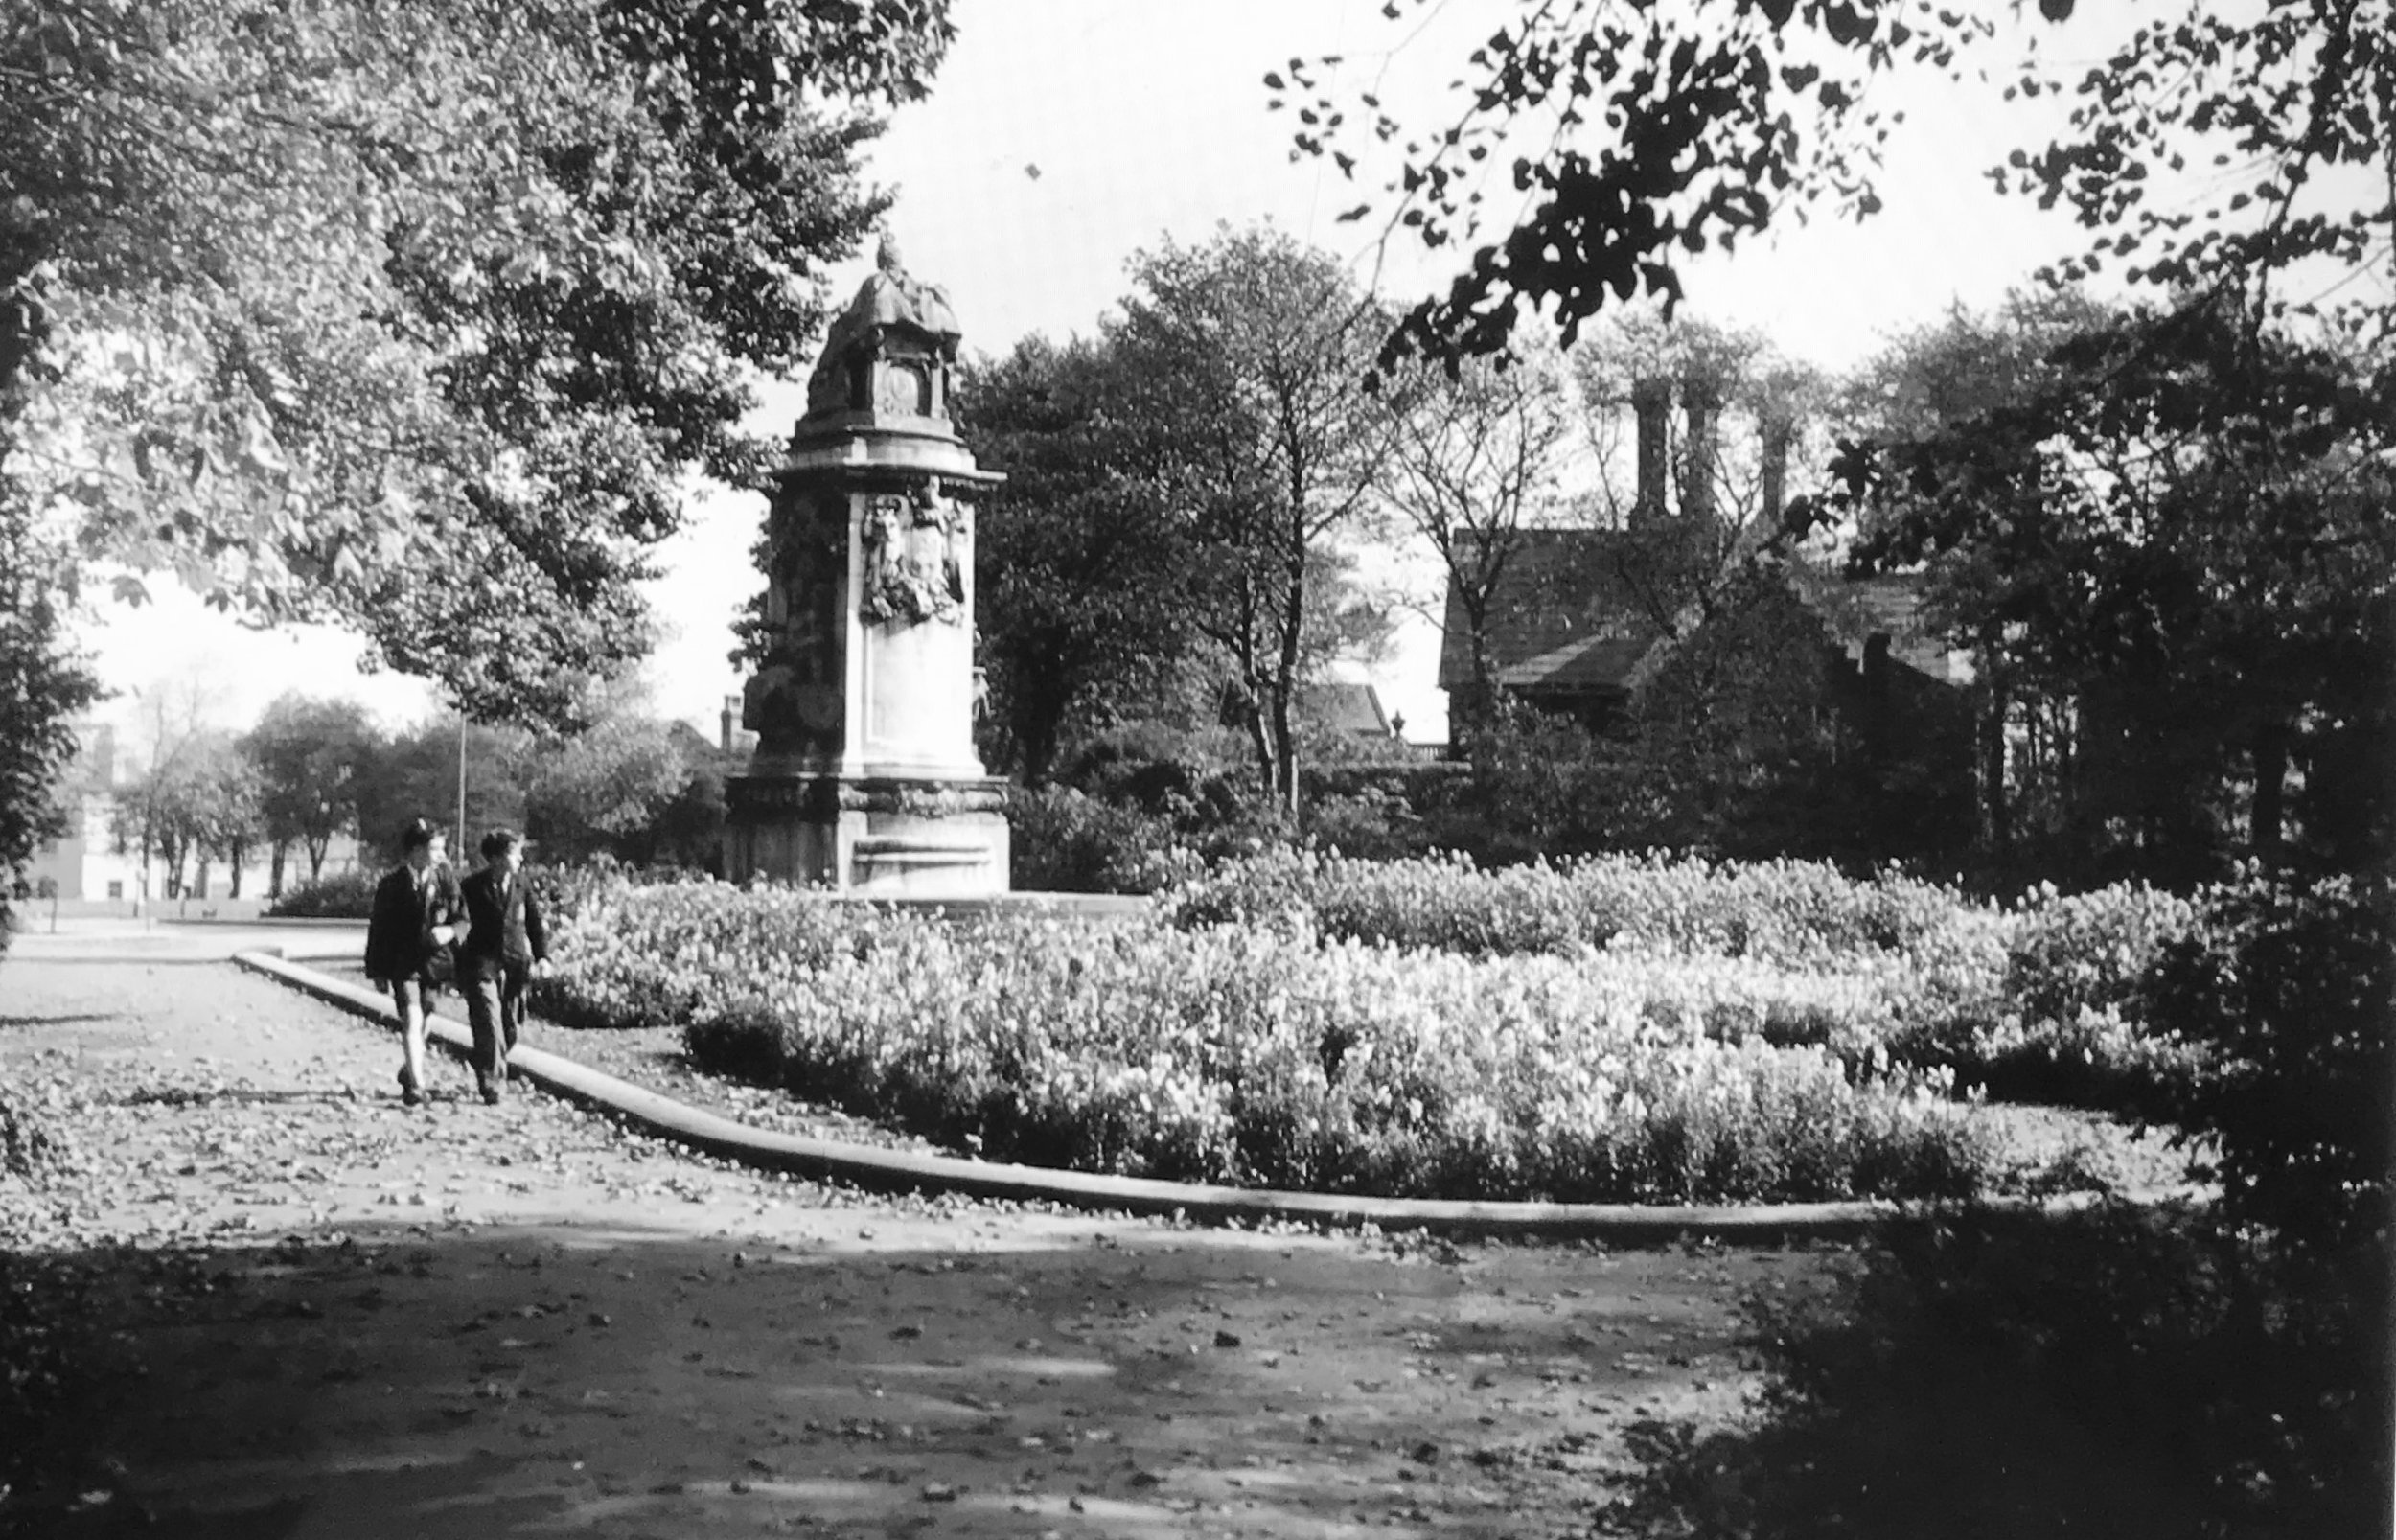 Queen Victoria Statue and Gardens, Woodhouse Moor, undated